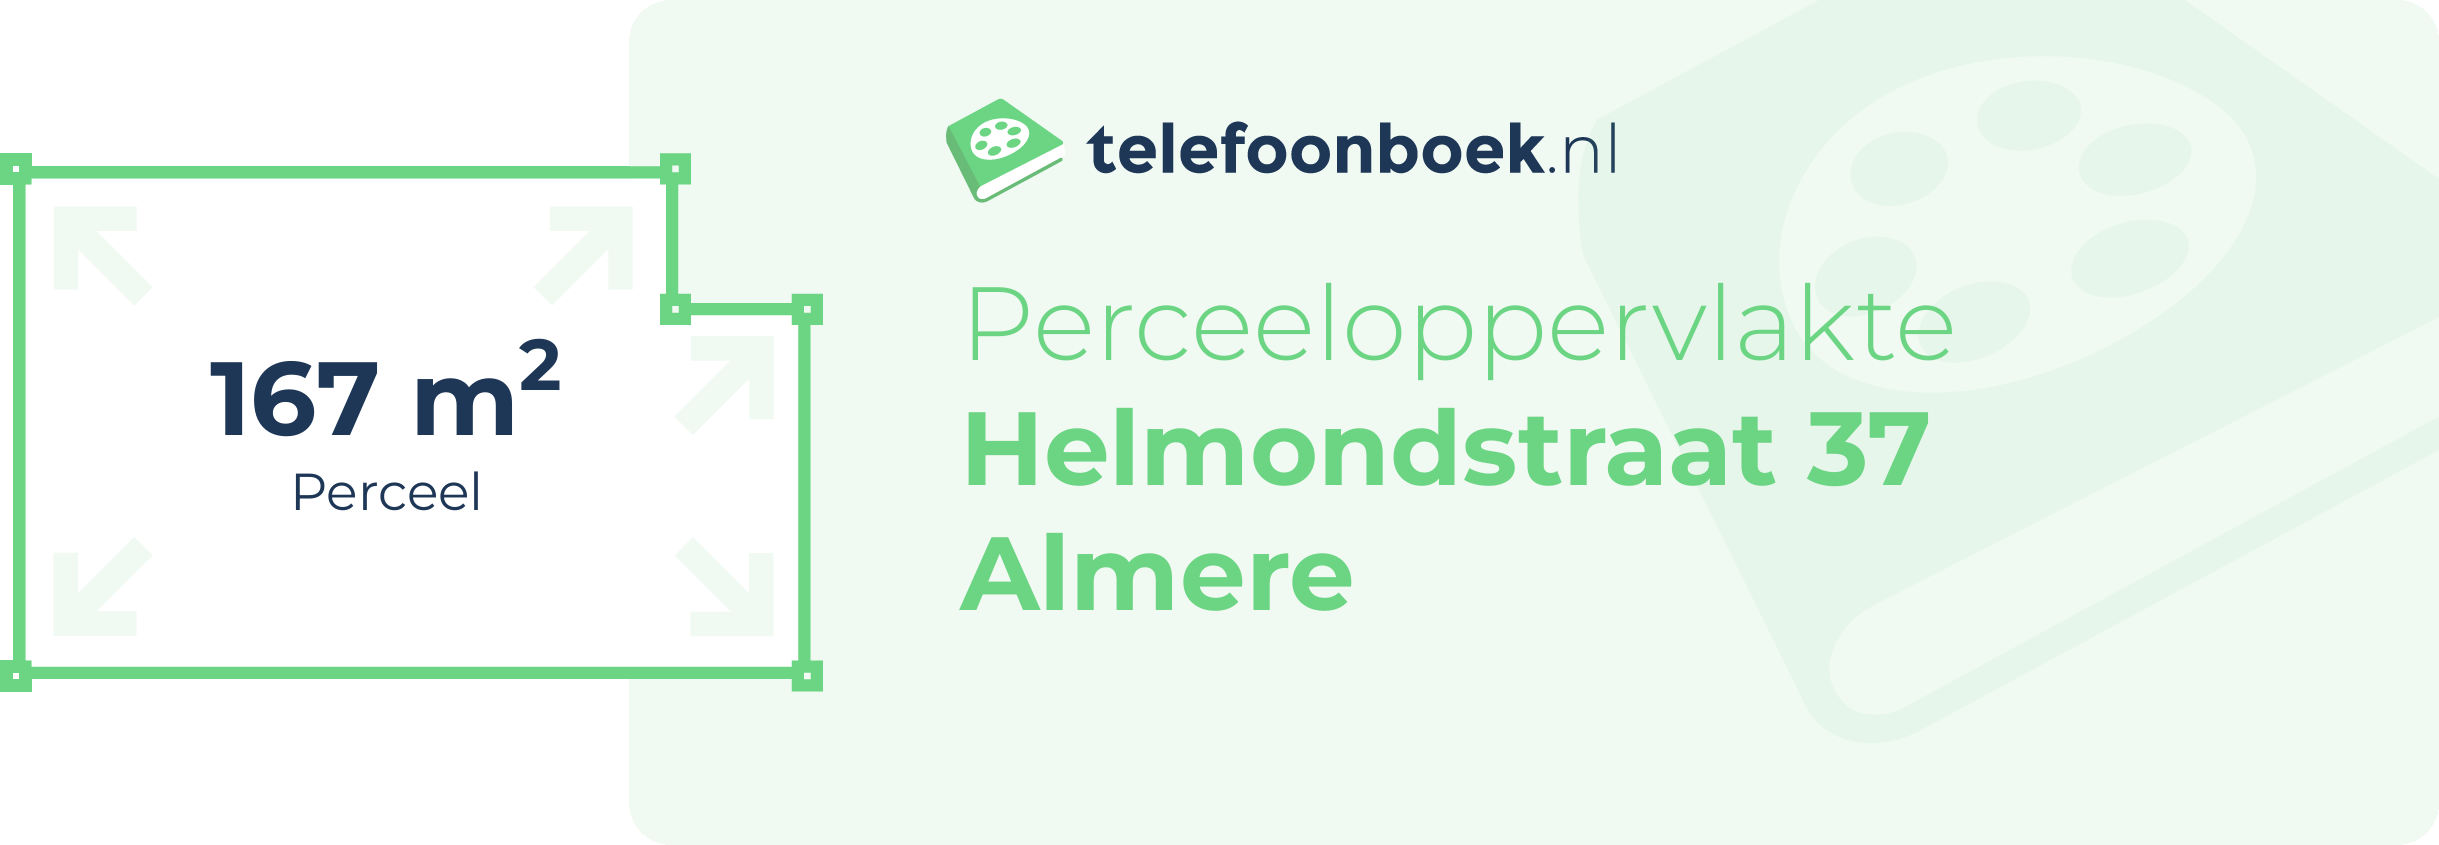 Perceeloppervlakte Helmondstraat 37 Almere